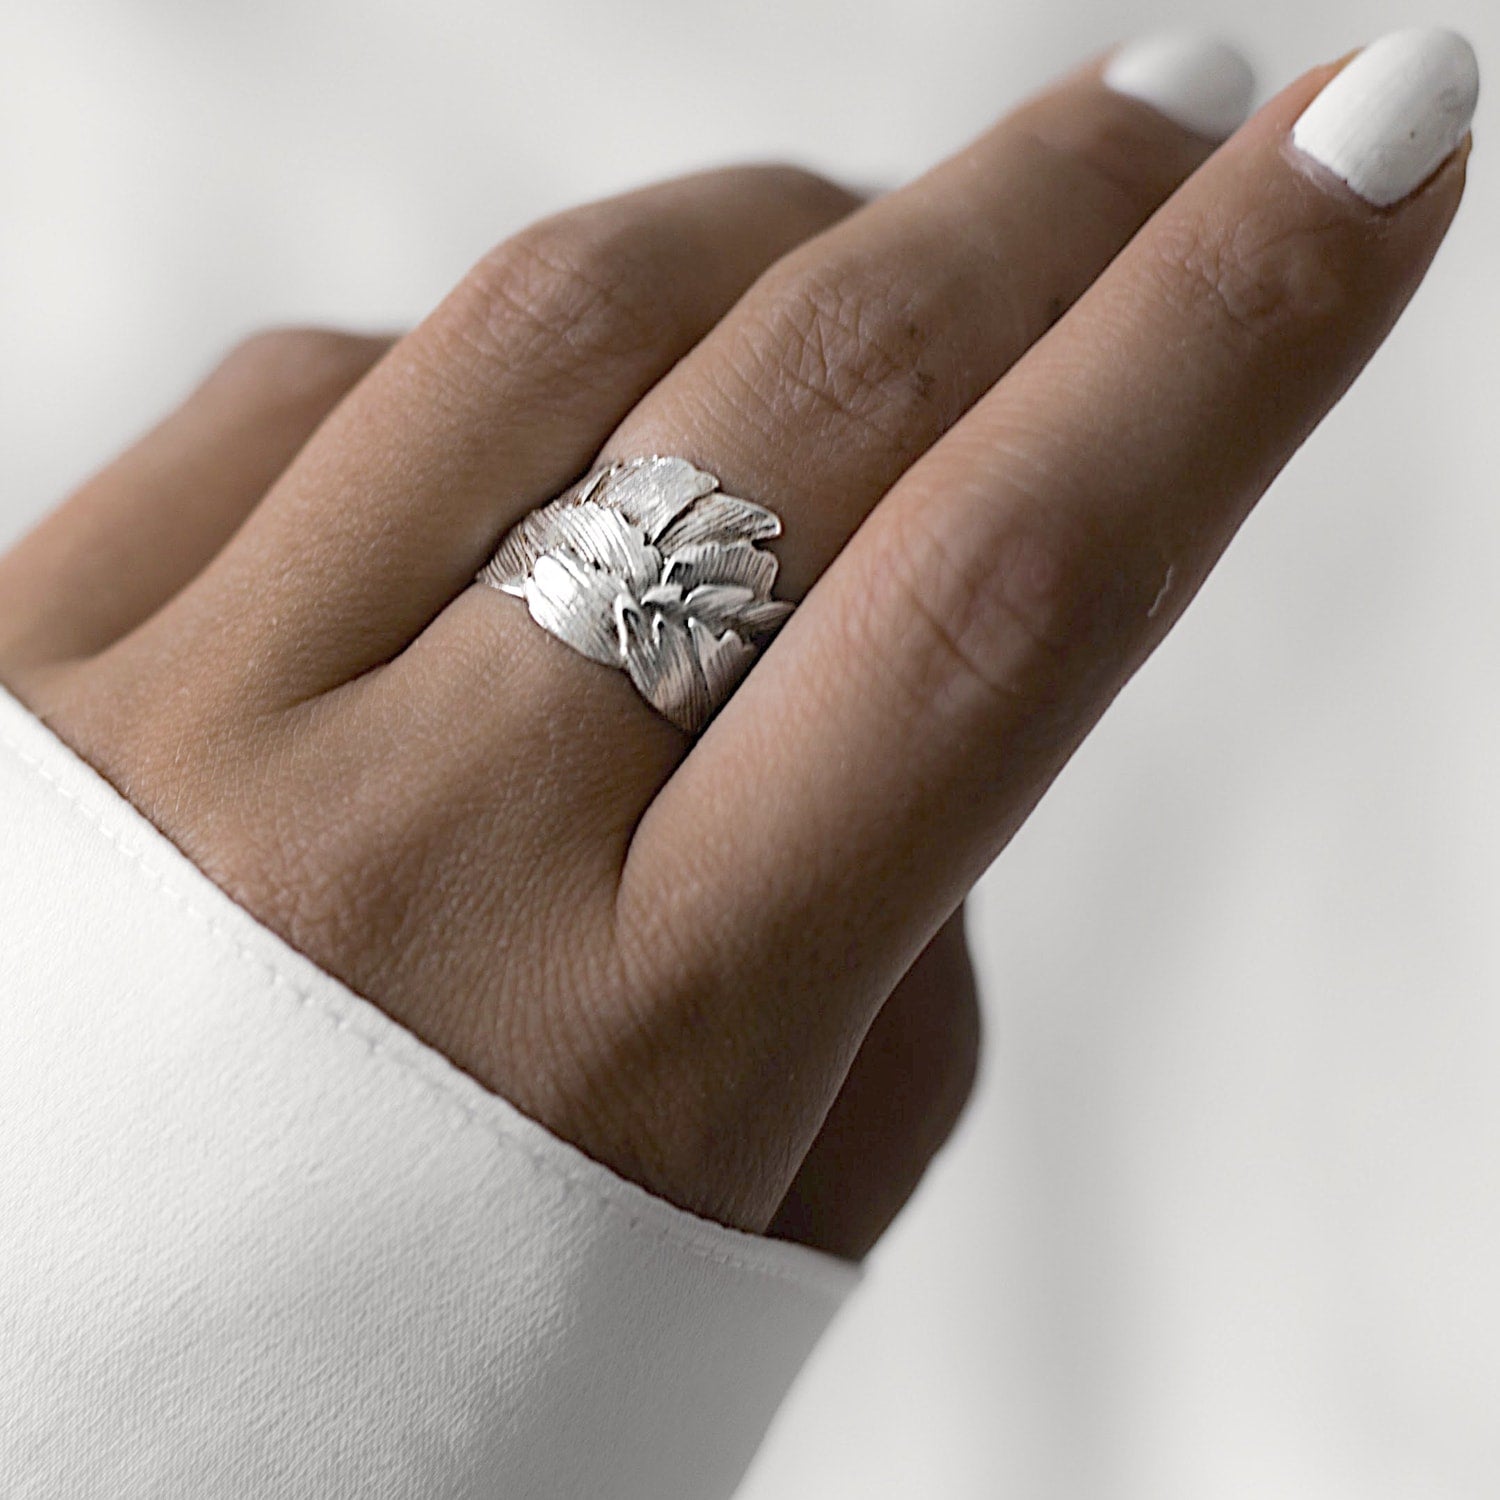 Dream Of Wedding Ring On My Finger - Wedding Rings Sets Ideas